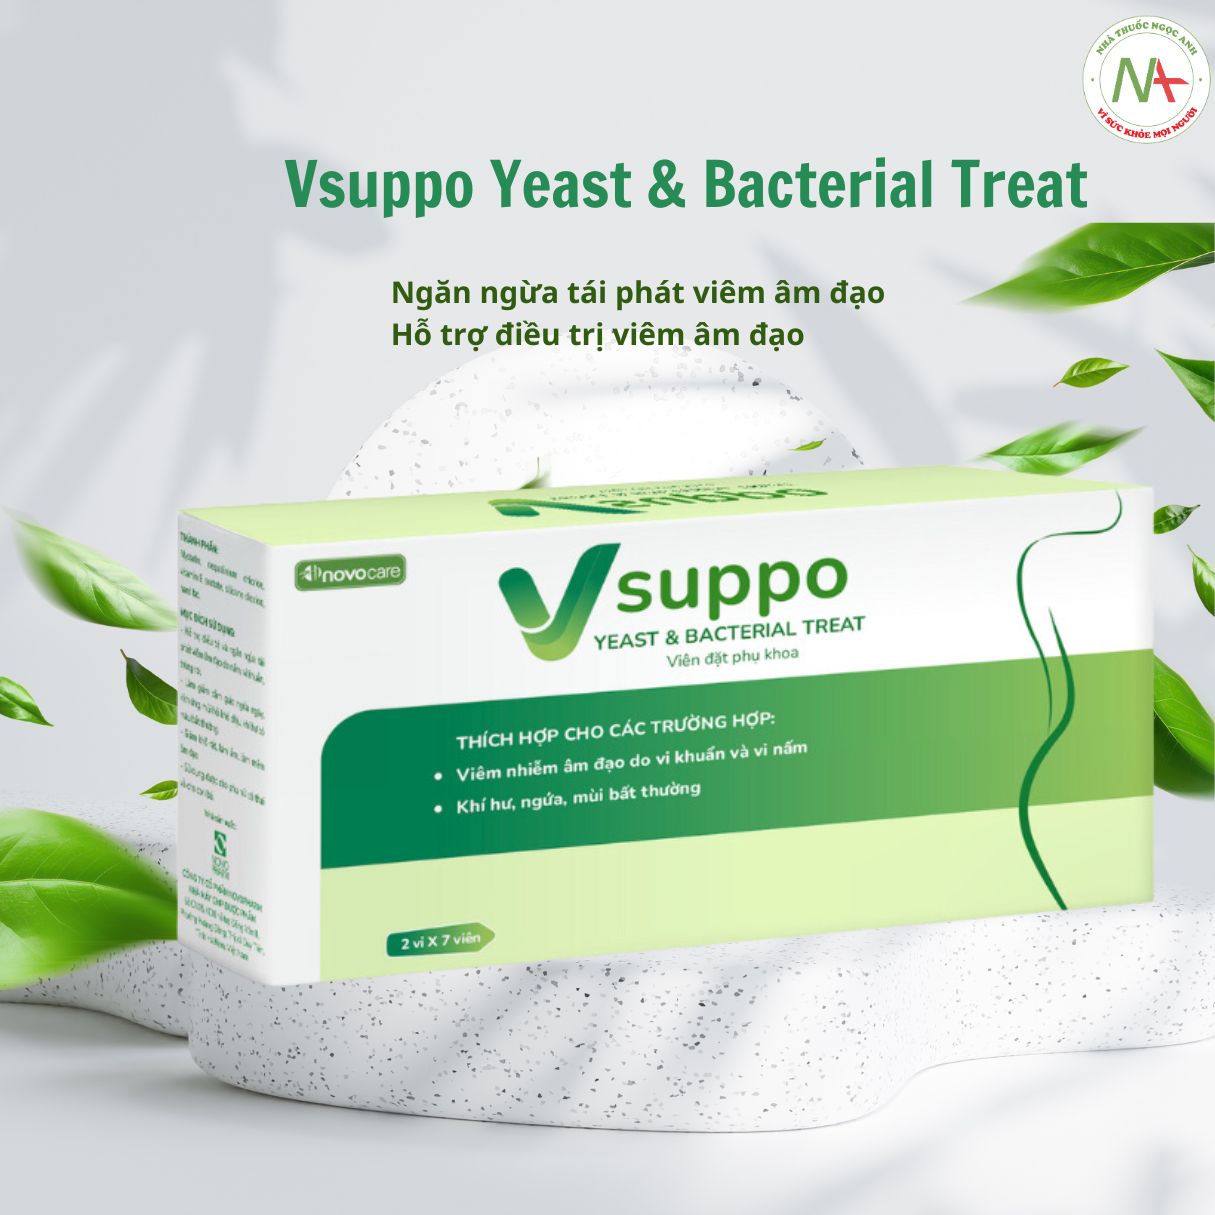 Vsuppo Yeast & Bacterial Treat